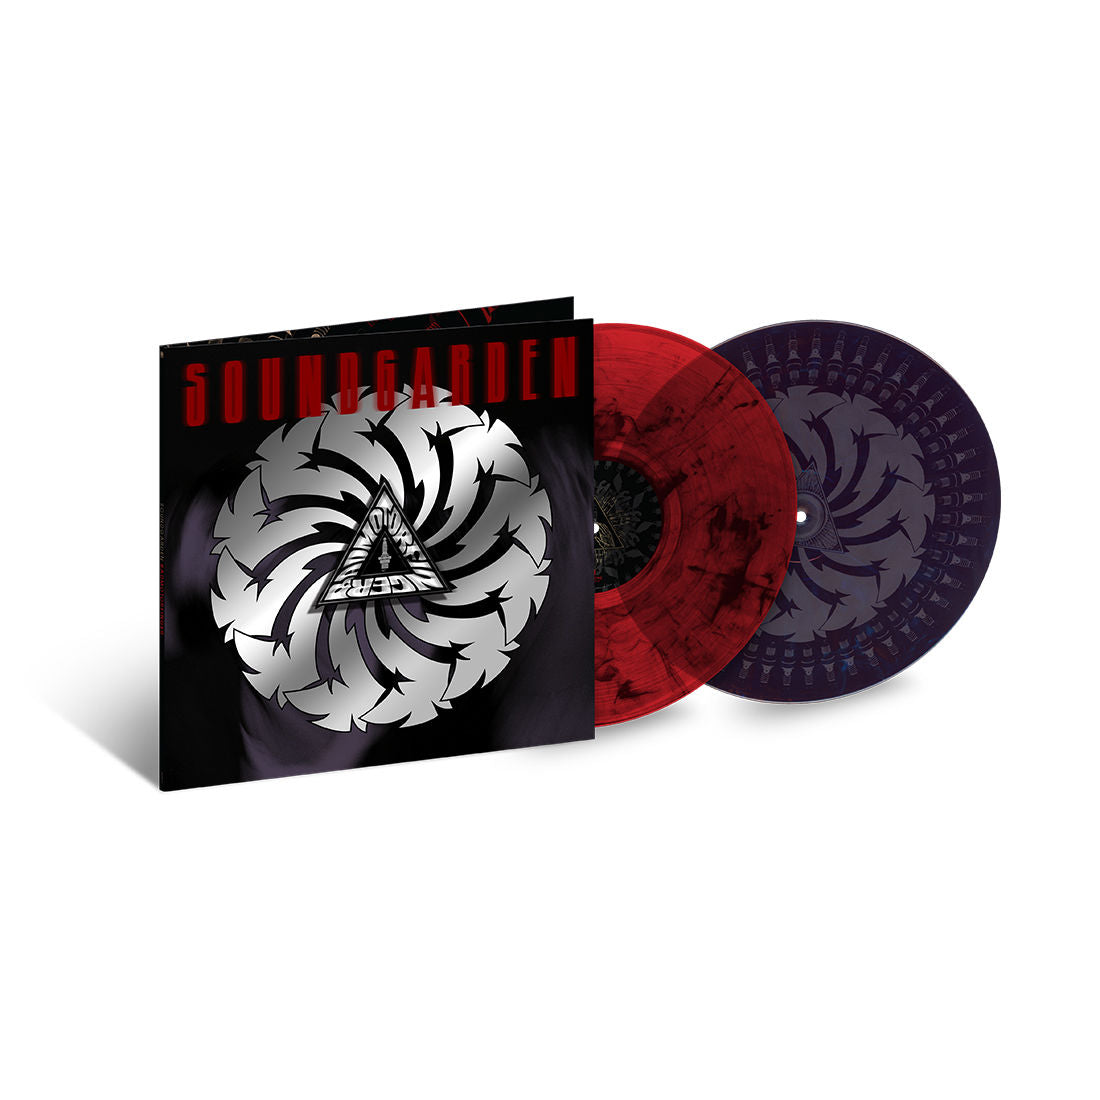 Badmotorfinger (Limited Edition, Colored Vinyl) (2 Lp's)